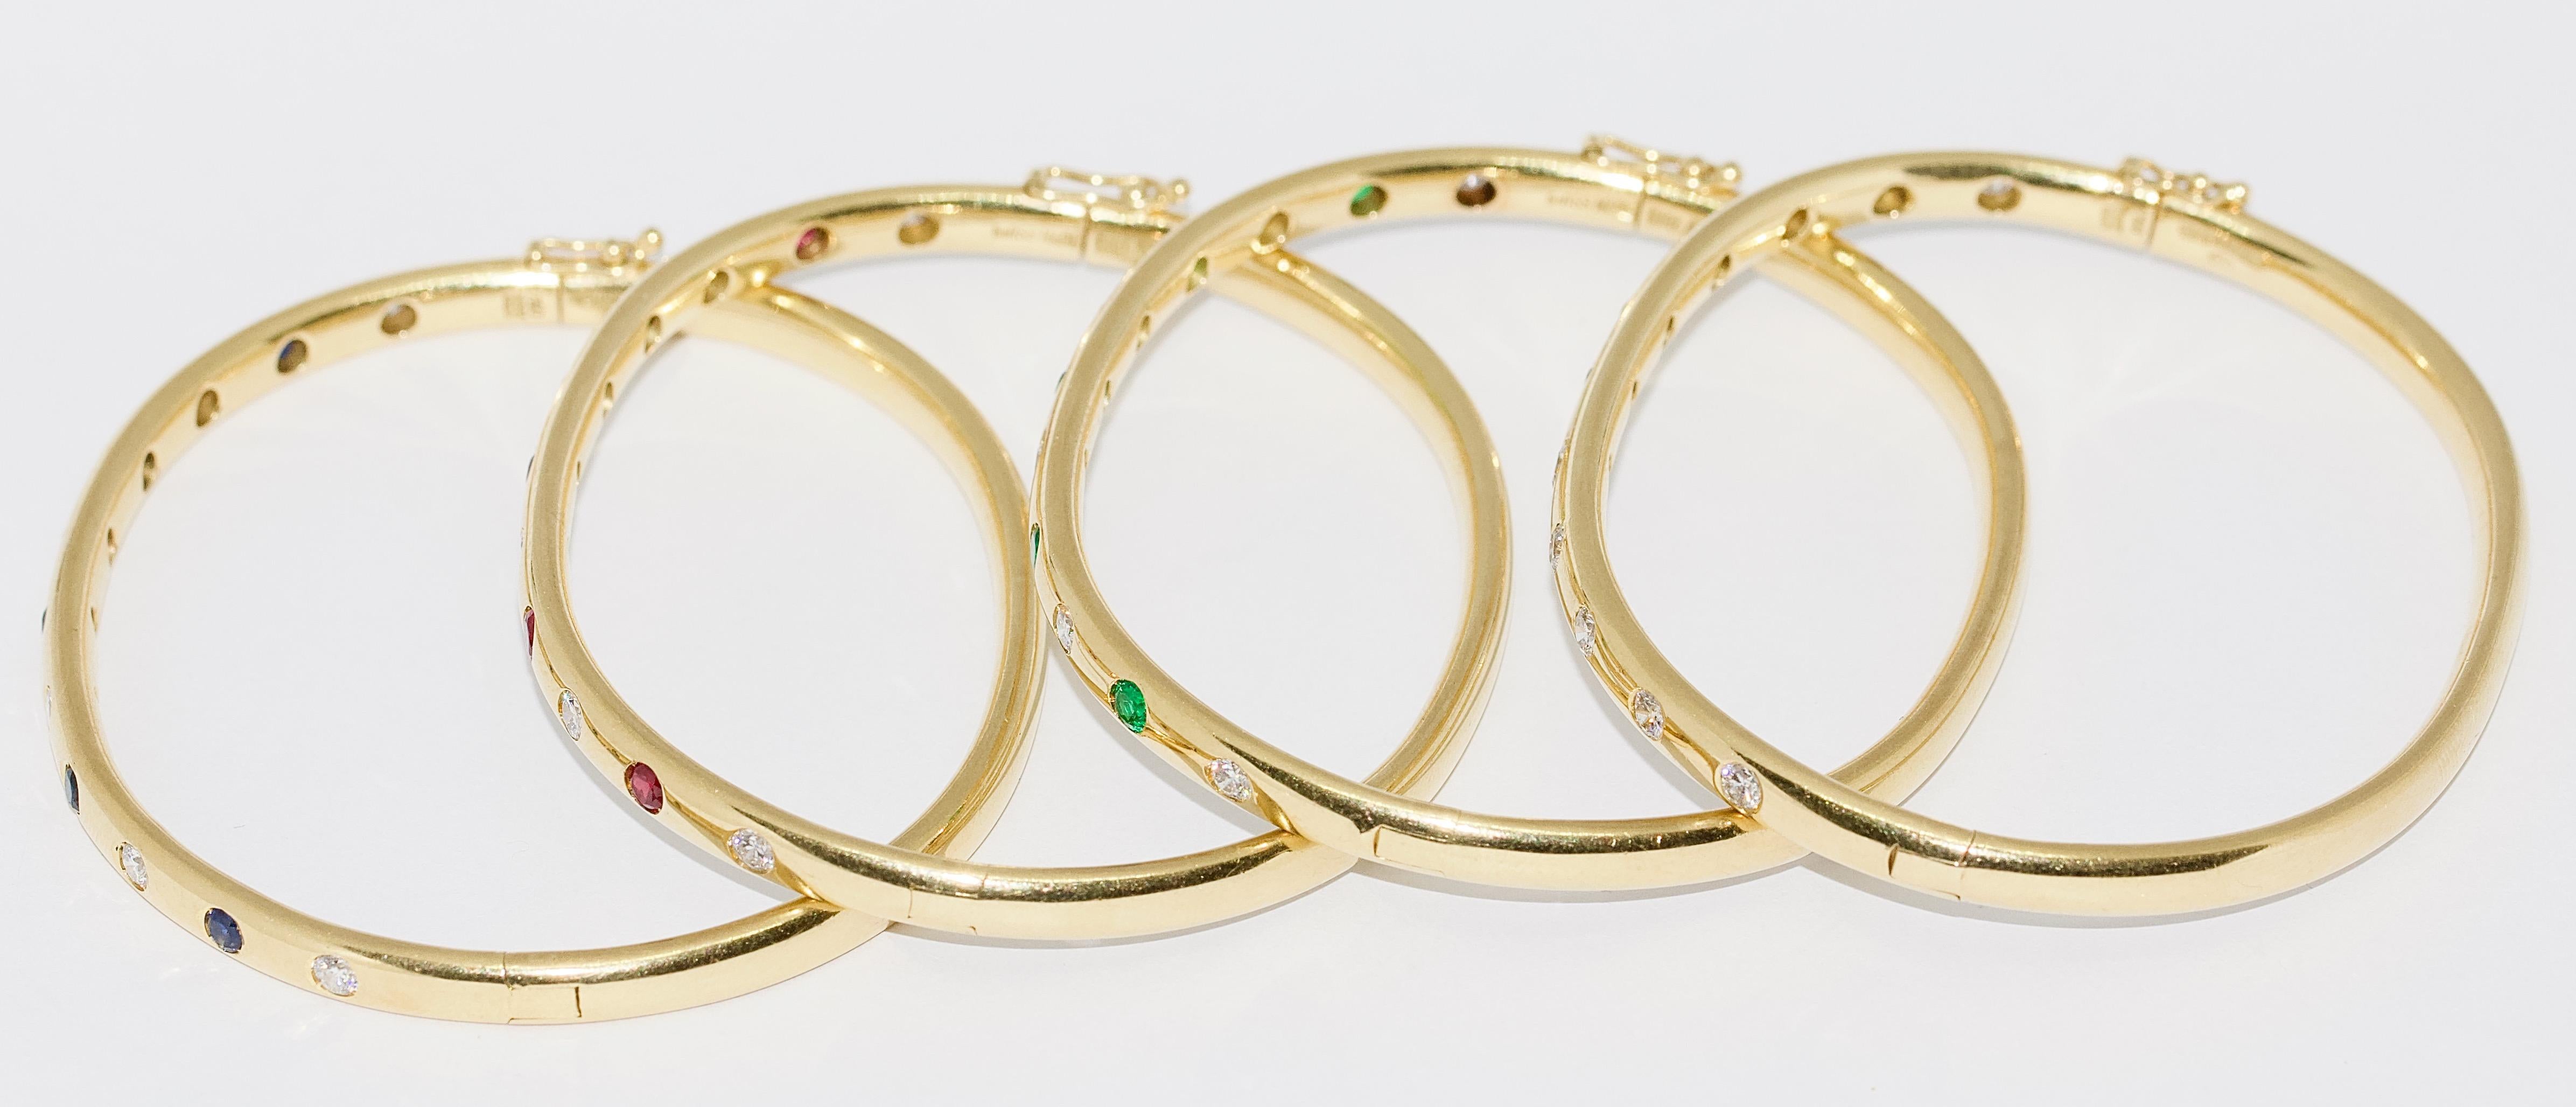 Set of Four Bangles, 18 Karat Gold Set with Diamonds, Sapphires and Emeralds 1